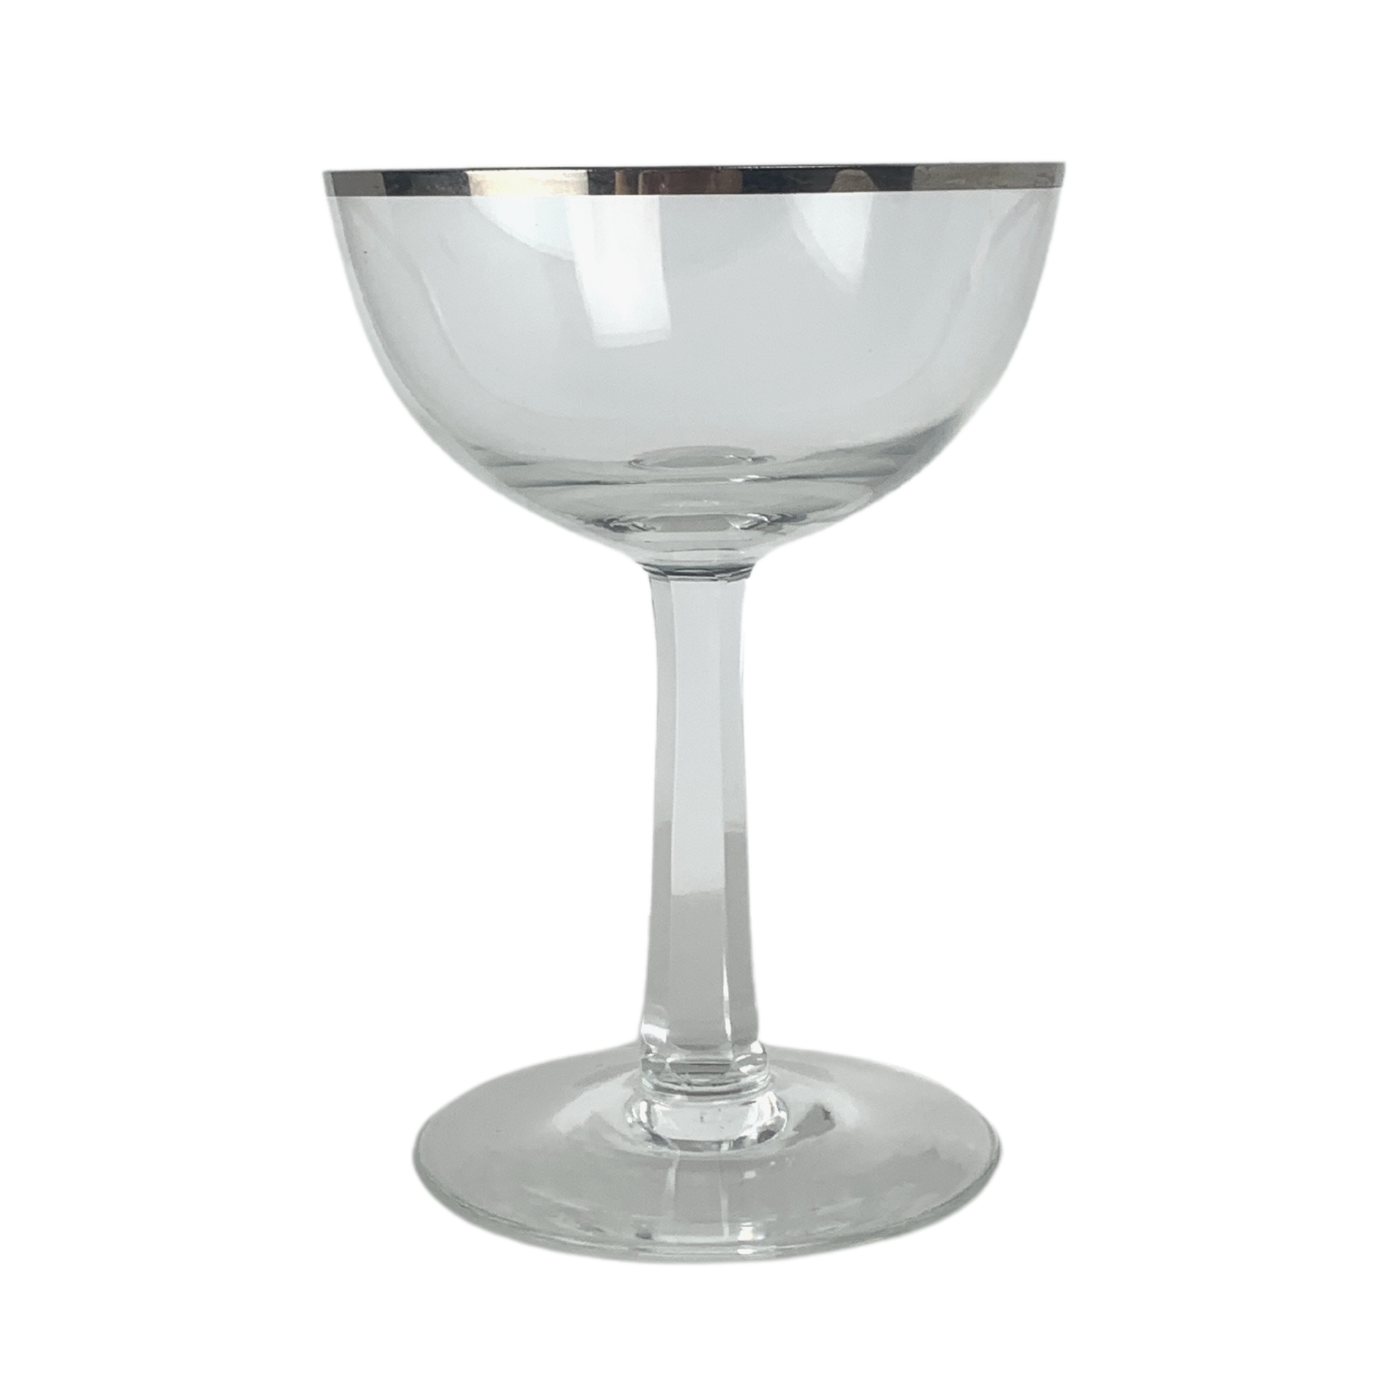 Kusak Crystal 'Platinum Classic', Martini - Set of 2